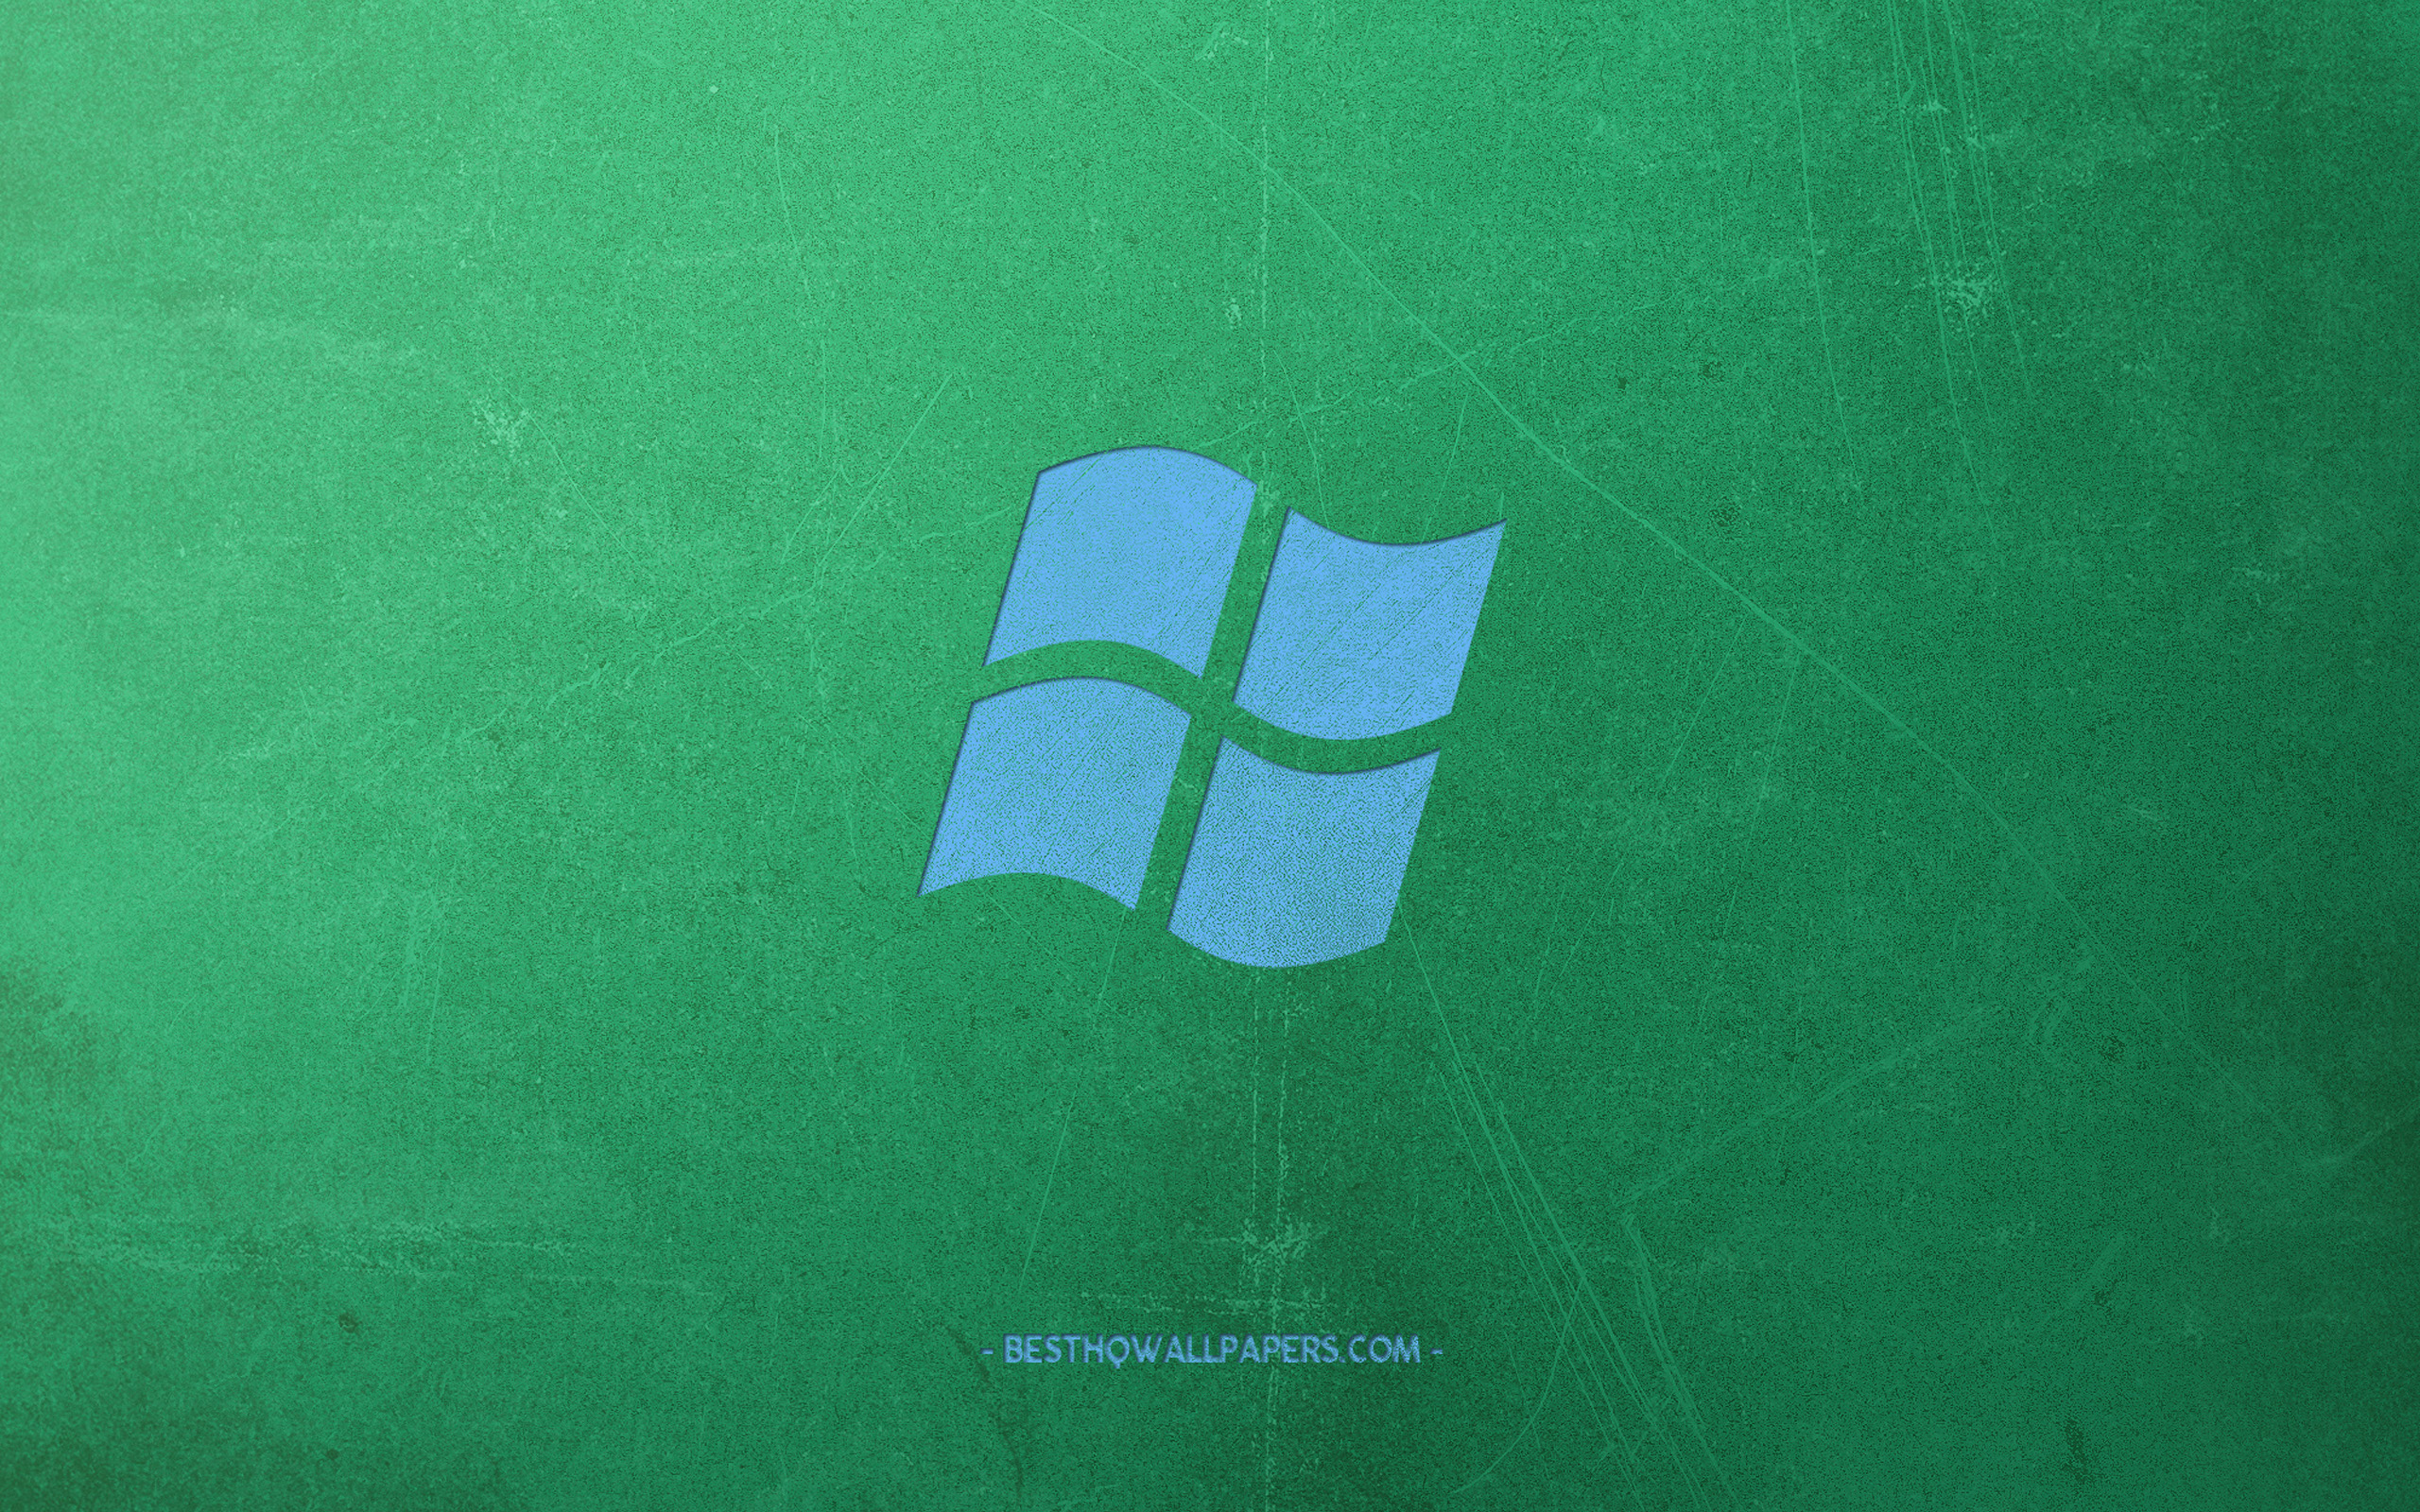 Download wallpaper Windows logo, green retro background, blue retro logo, emblem, creative art, retro style, Windows for desktop with resolution 2560x1600. High Quality HD picture wallpaper